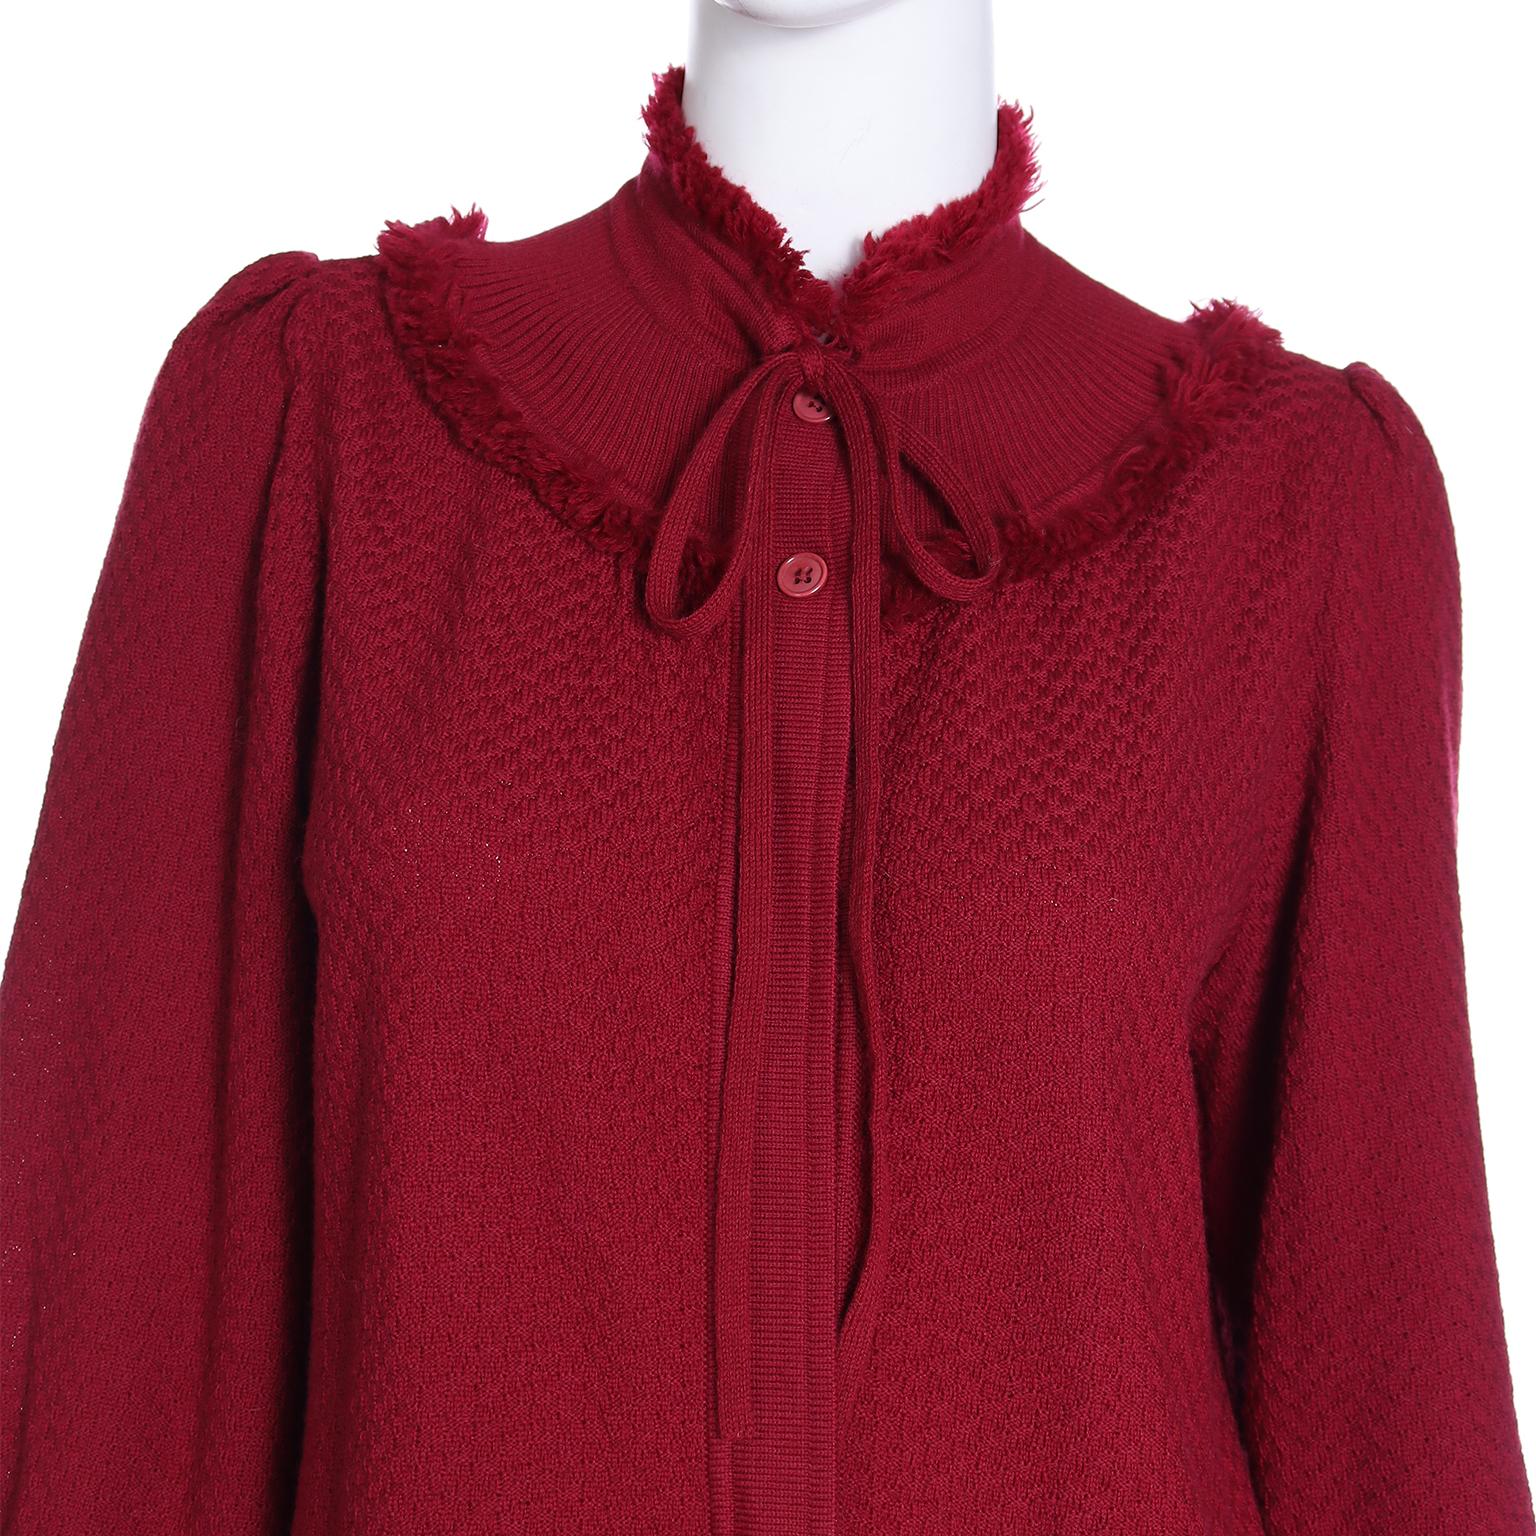 Vintage Yves Saint Laurent 1970s Burgundy Red Fringe Wool Knit Sweater For Sale 4